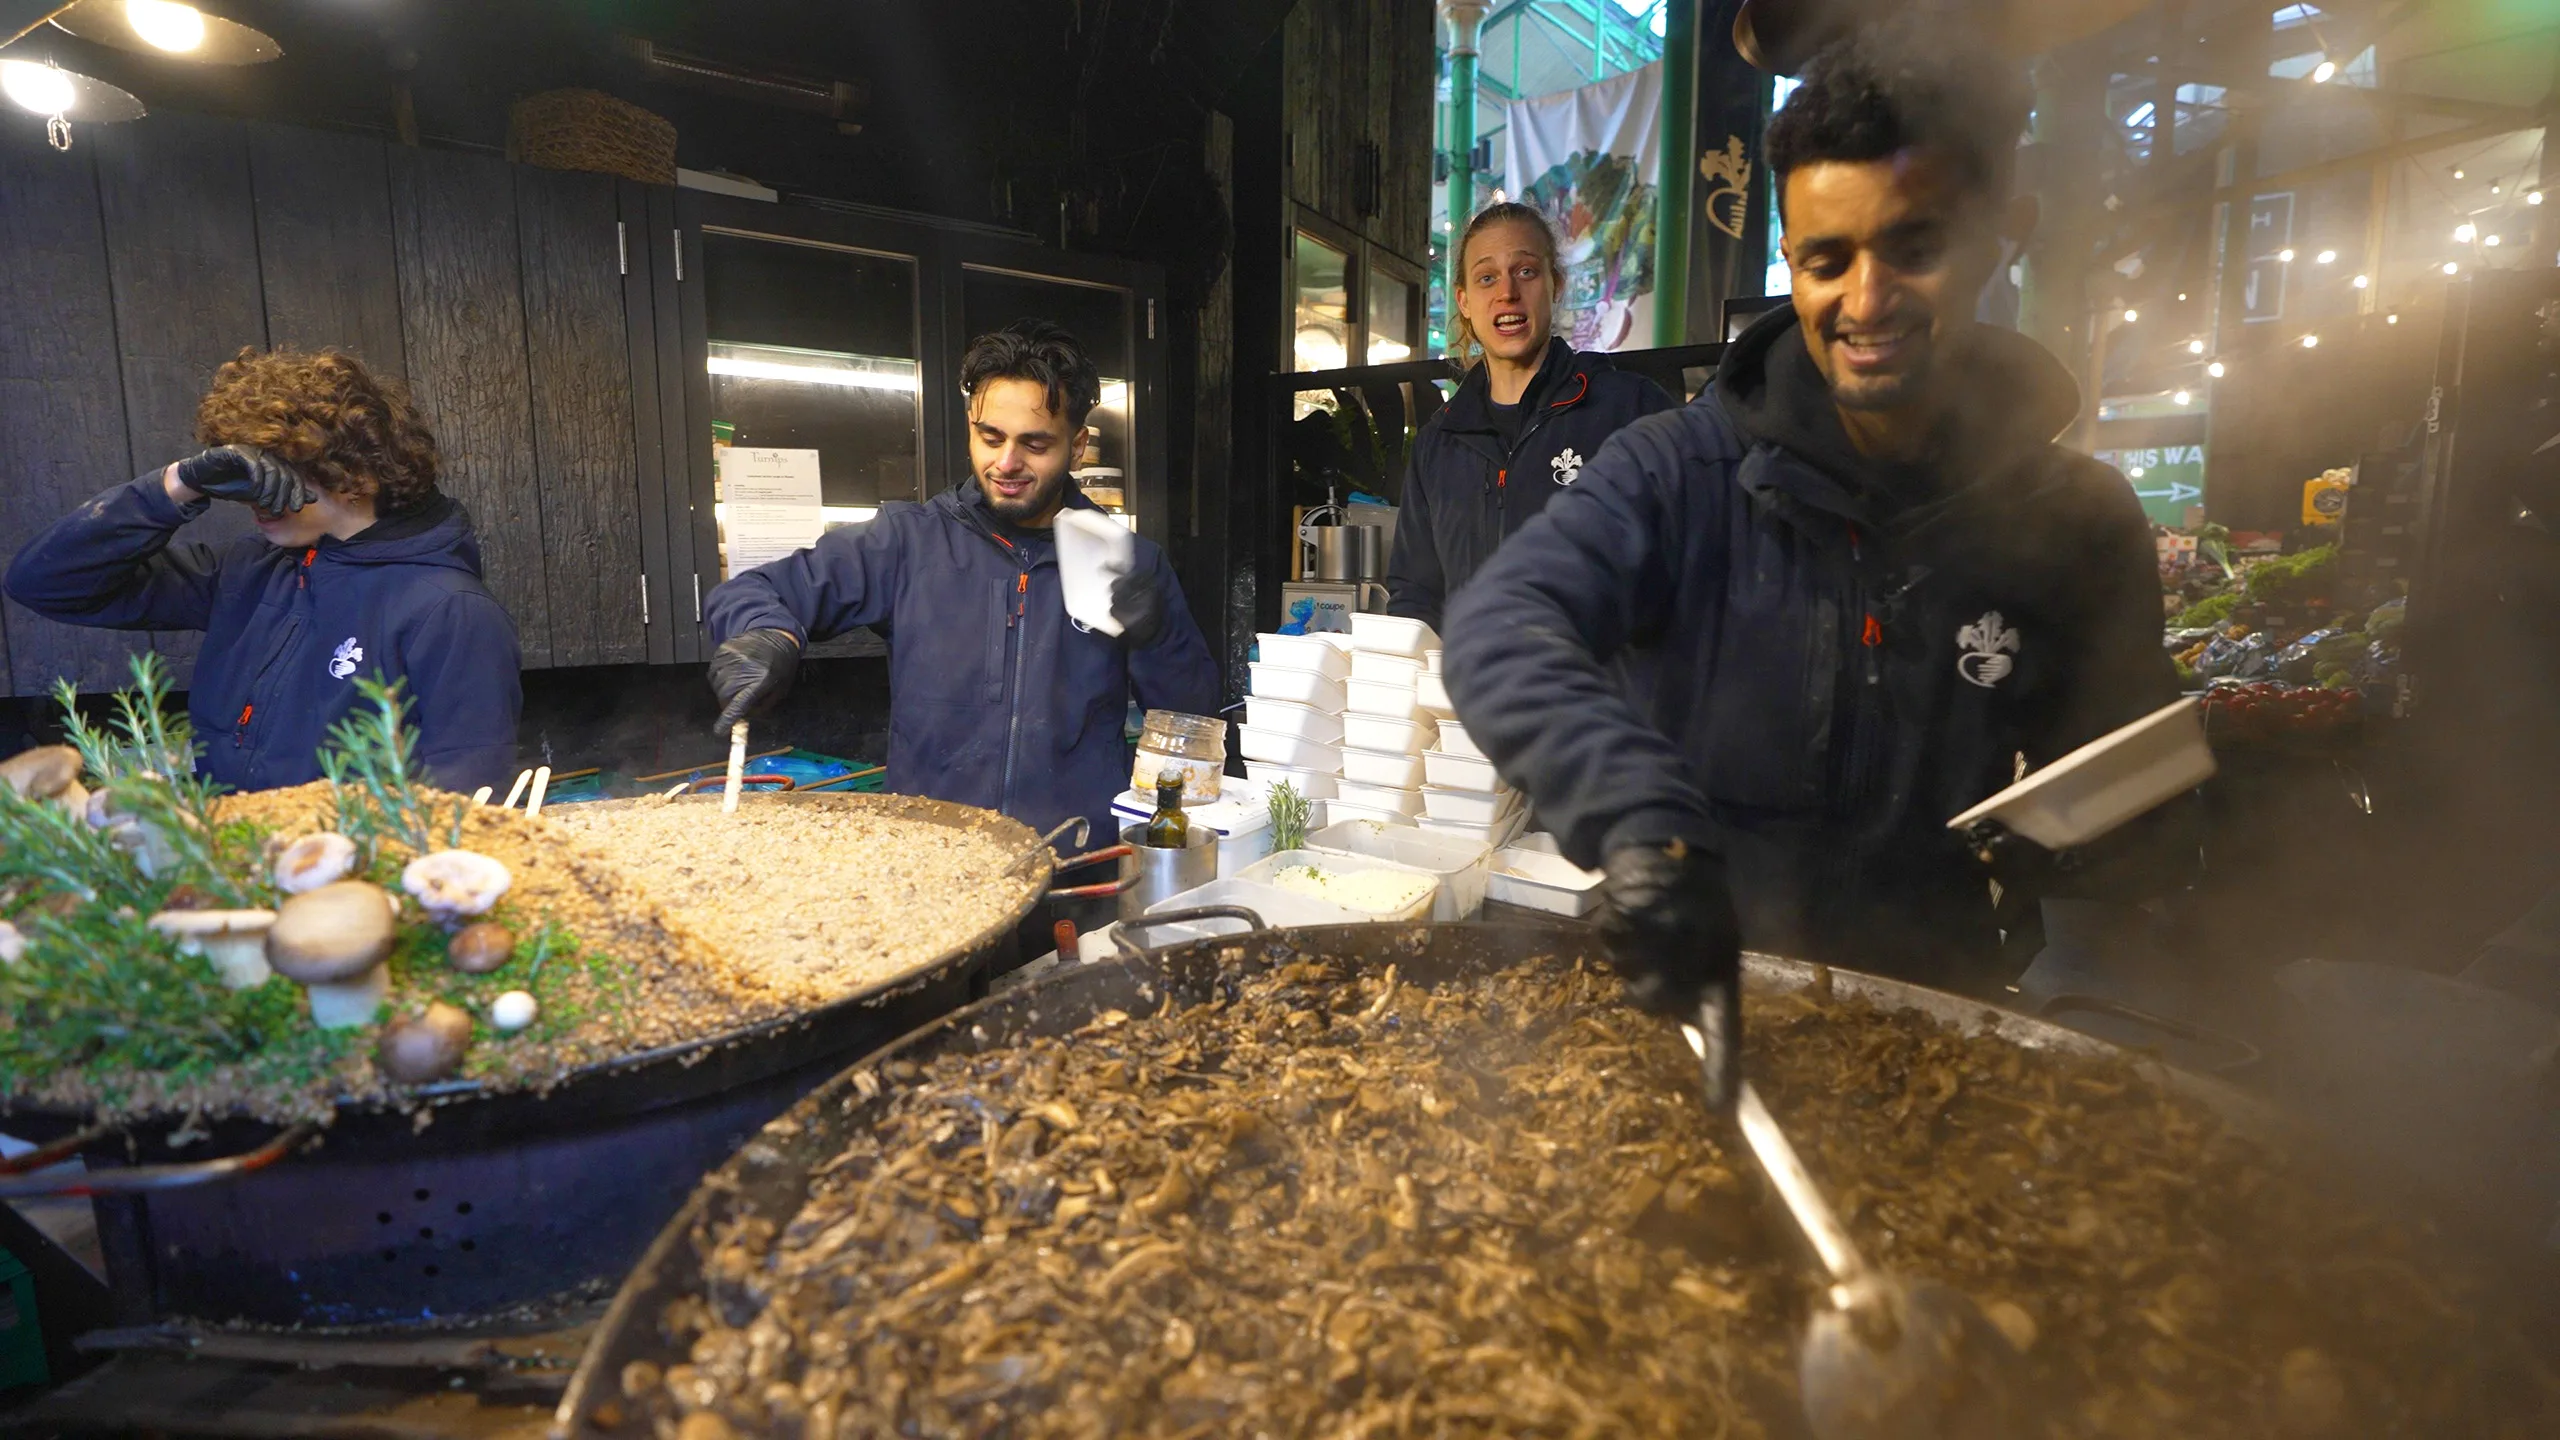 The vendors at Wild Mushroom Risotto in Borough Market | Davidsbeenhere